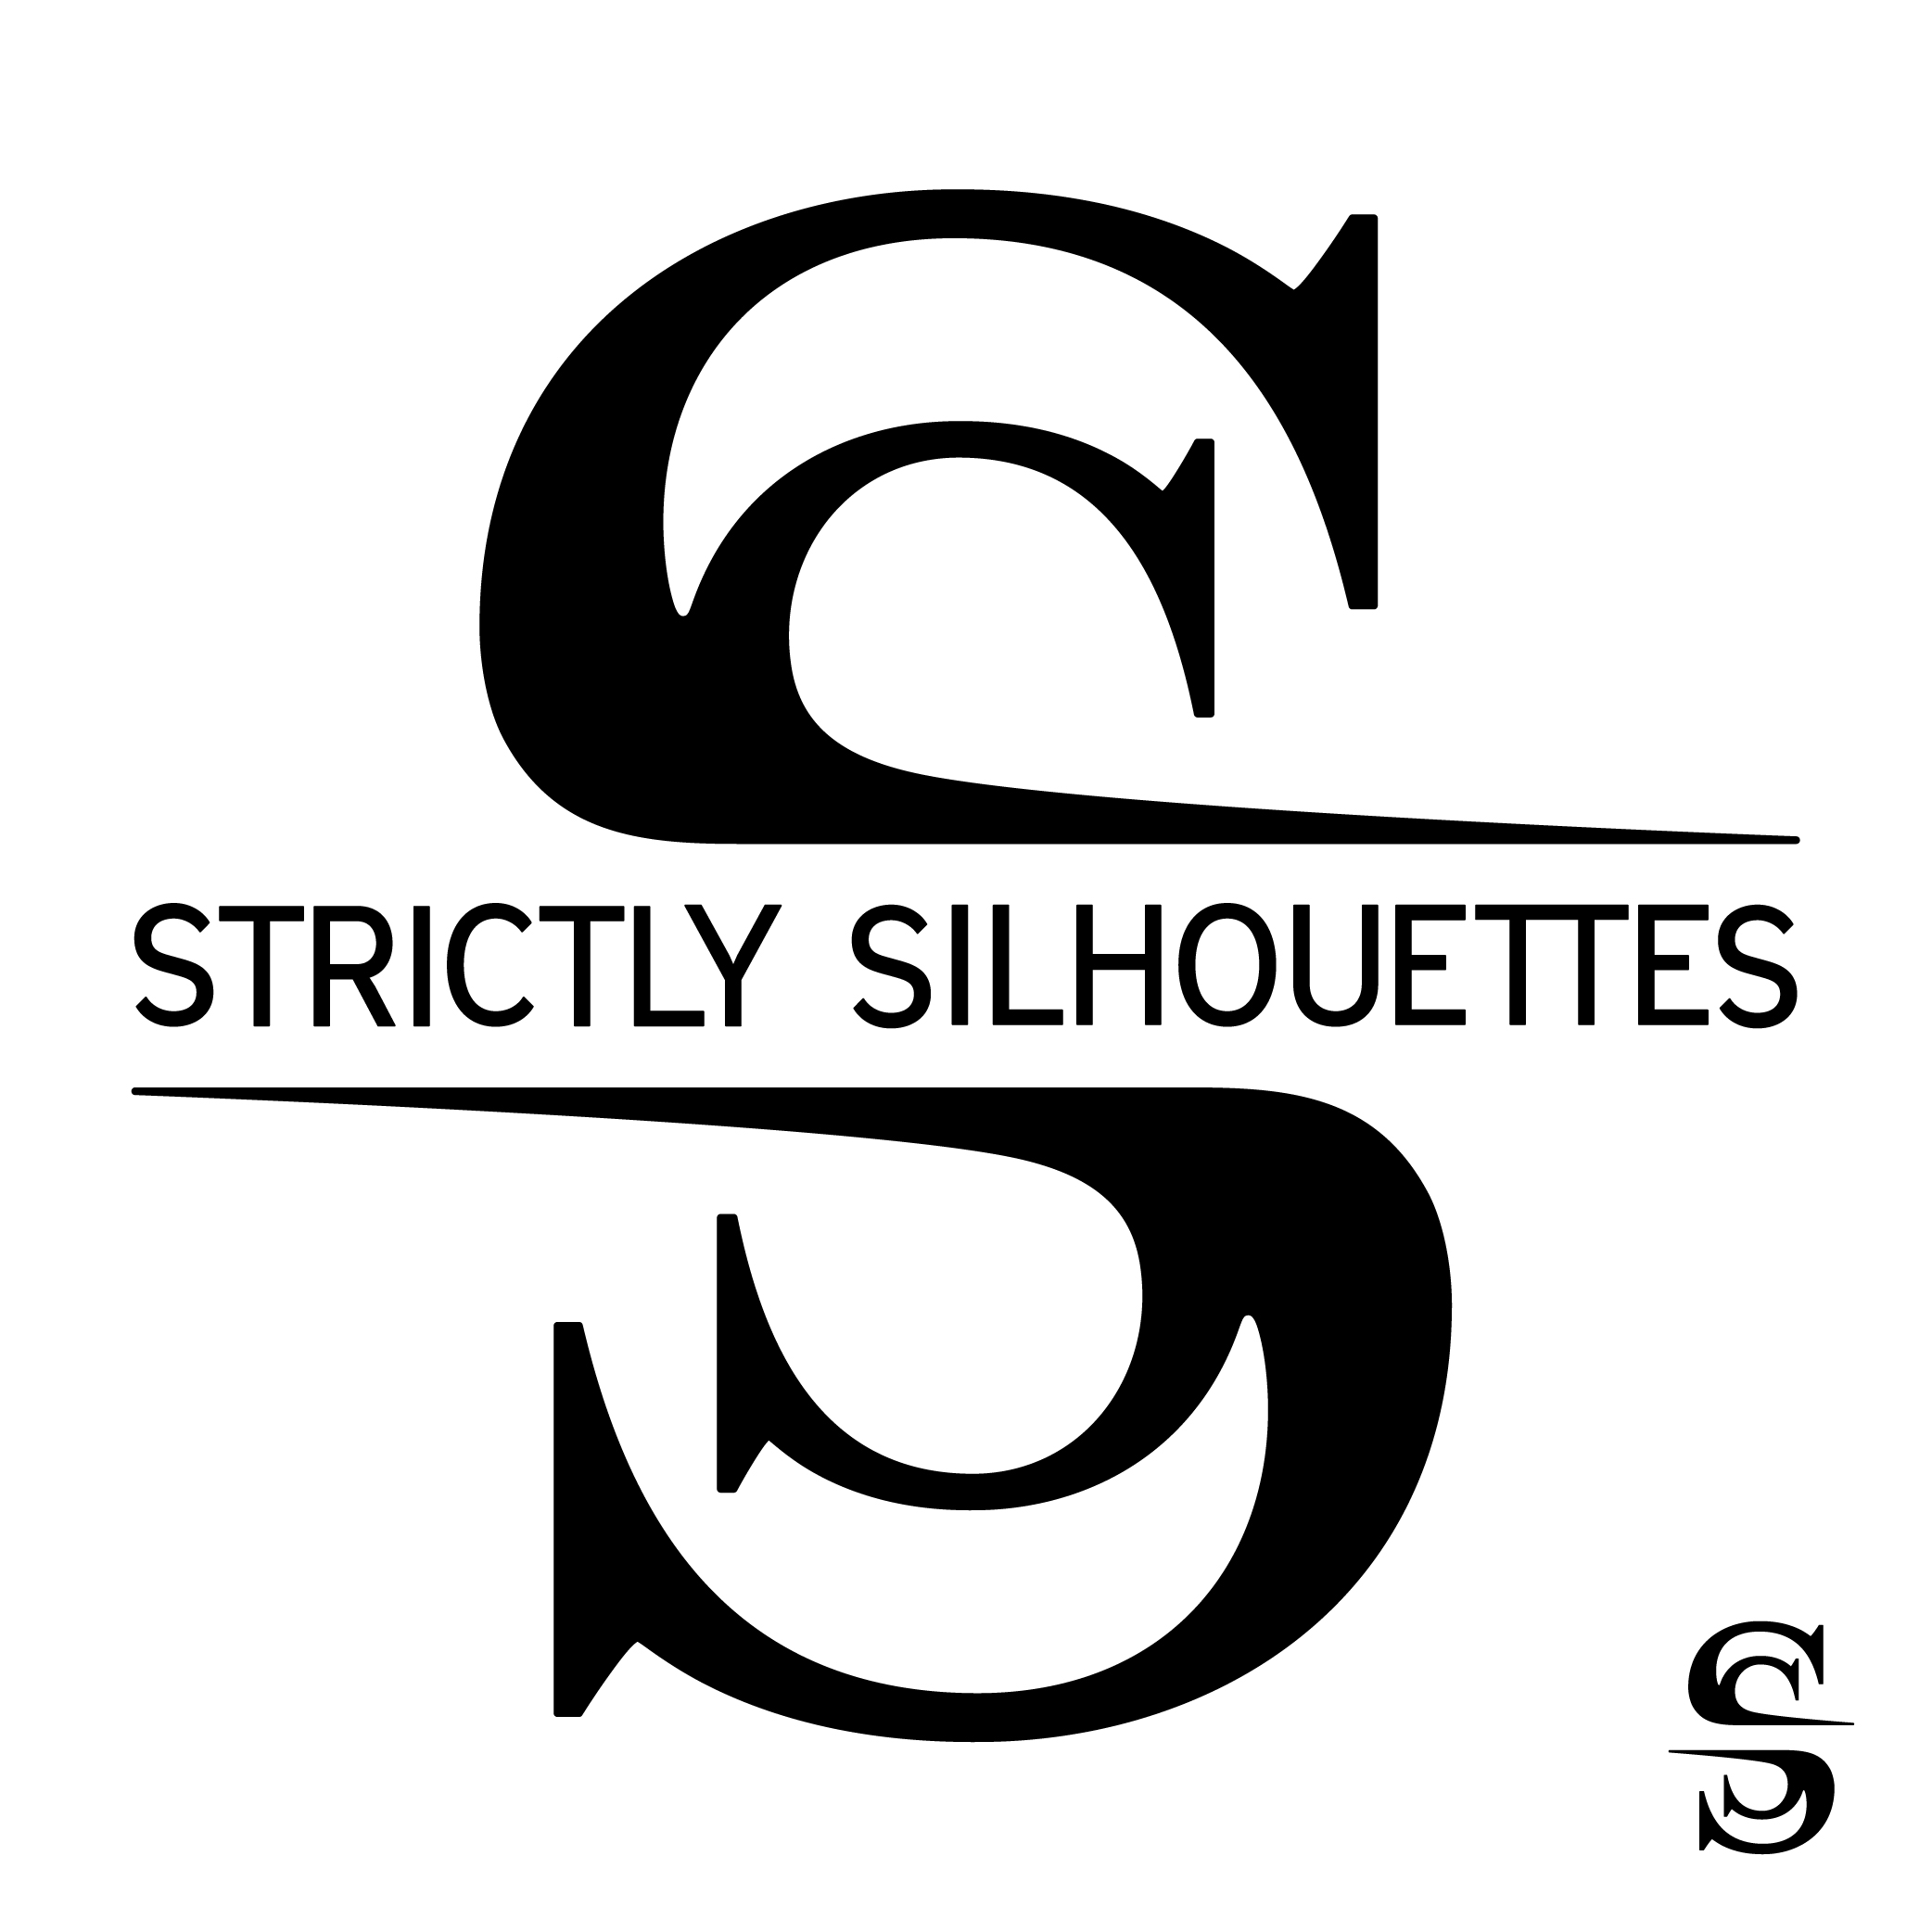 Download Logo Design For An Online Svg Shop The Crit Pit Graphic Design Forum